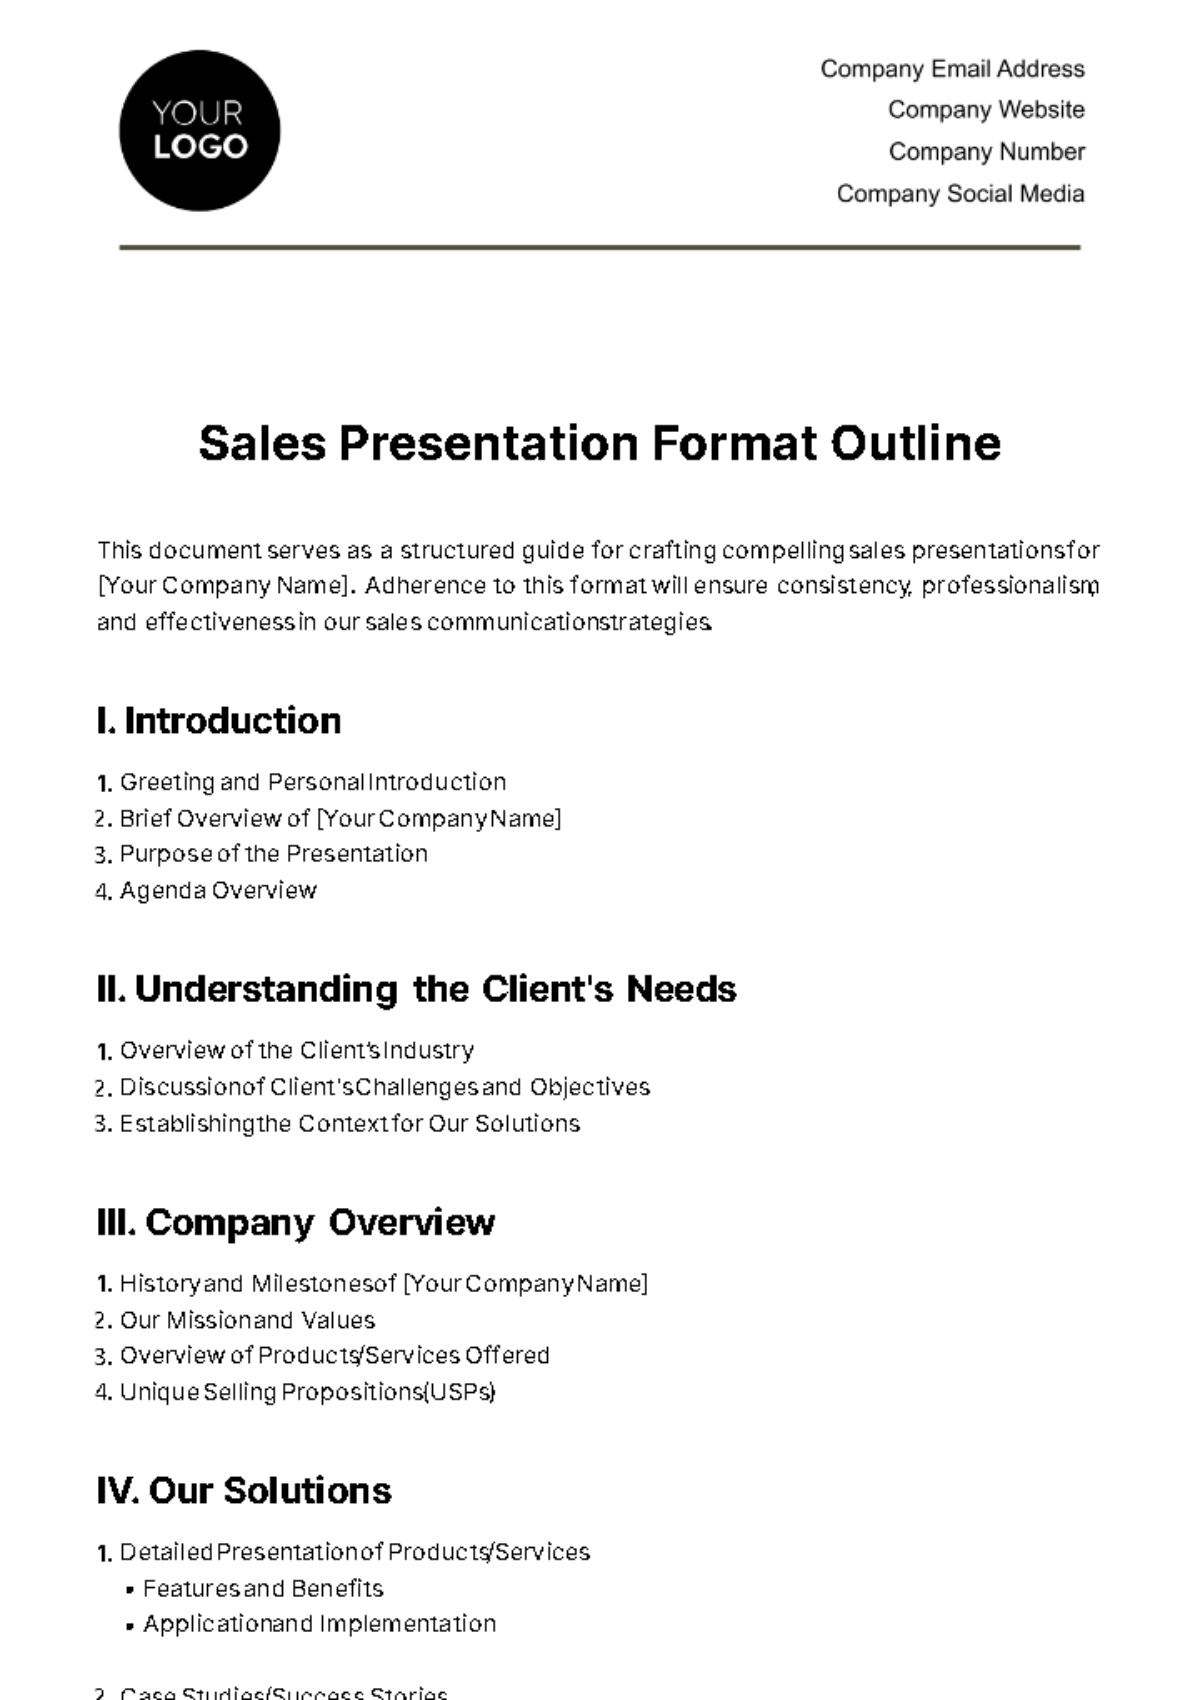 Free Sales Presentation Format Outline Template